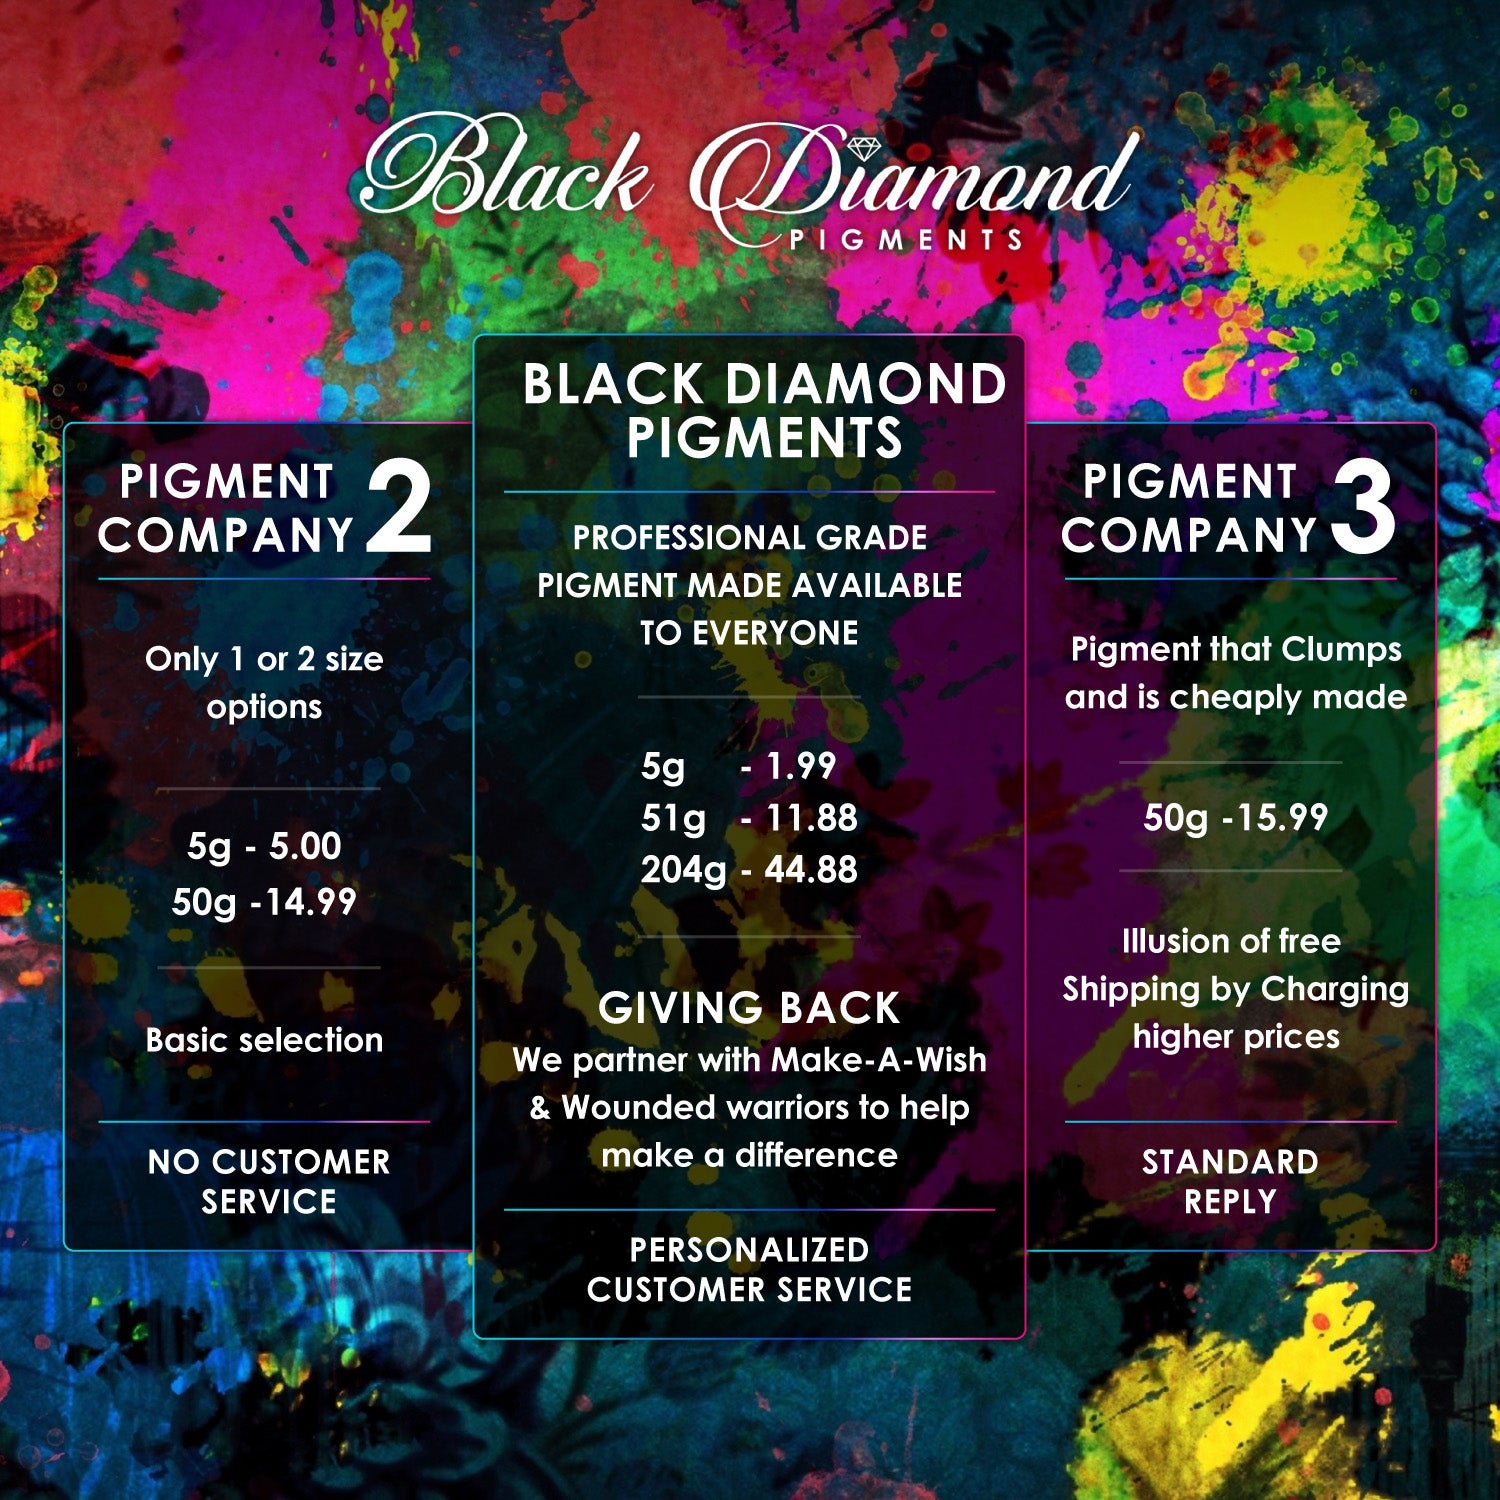 "HAZELNUT" Black Diamond Pigments